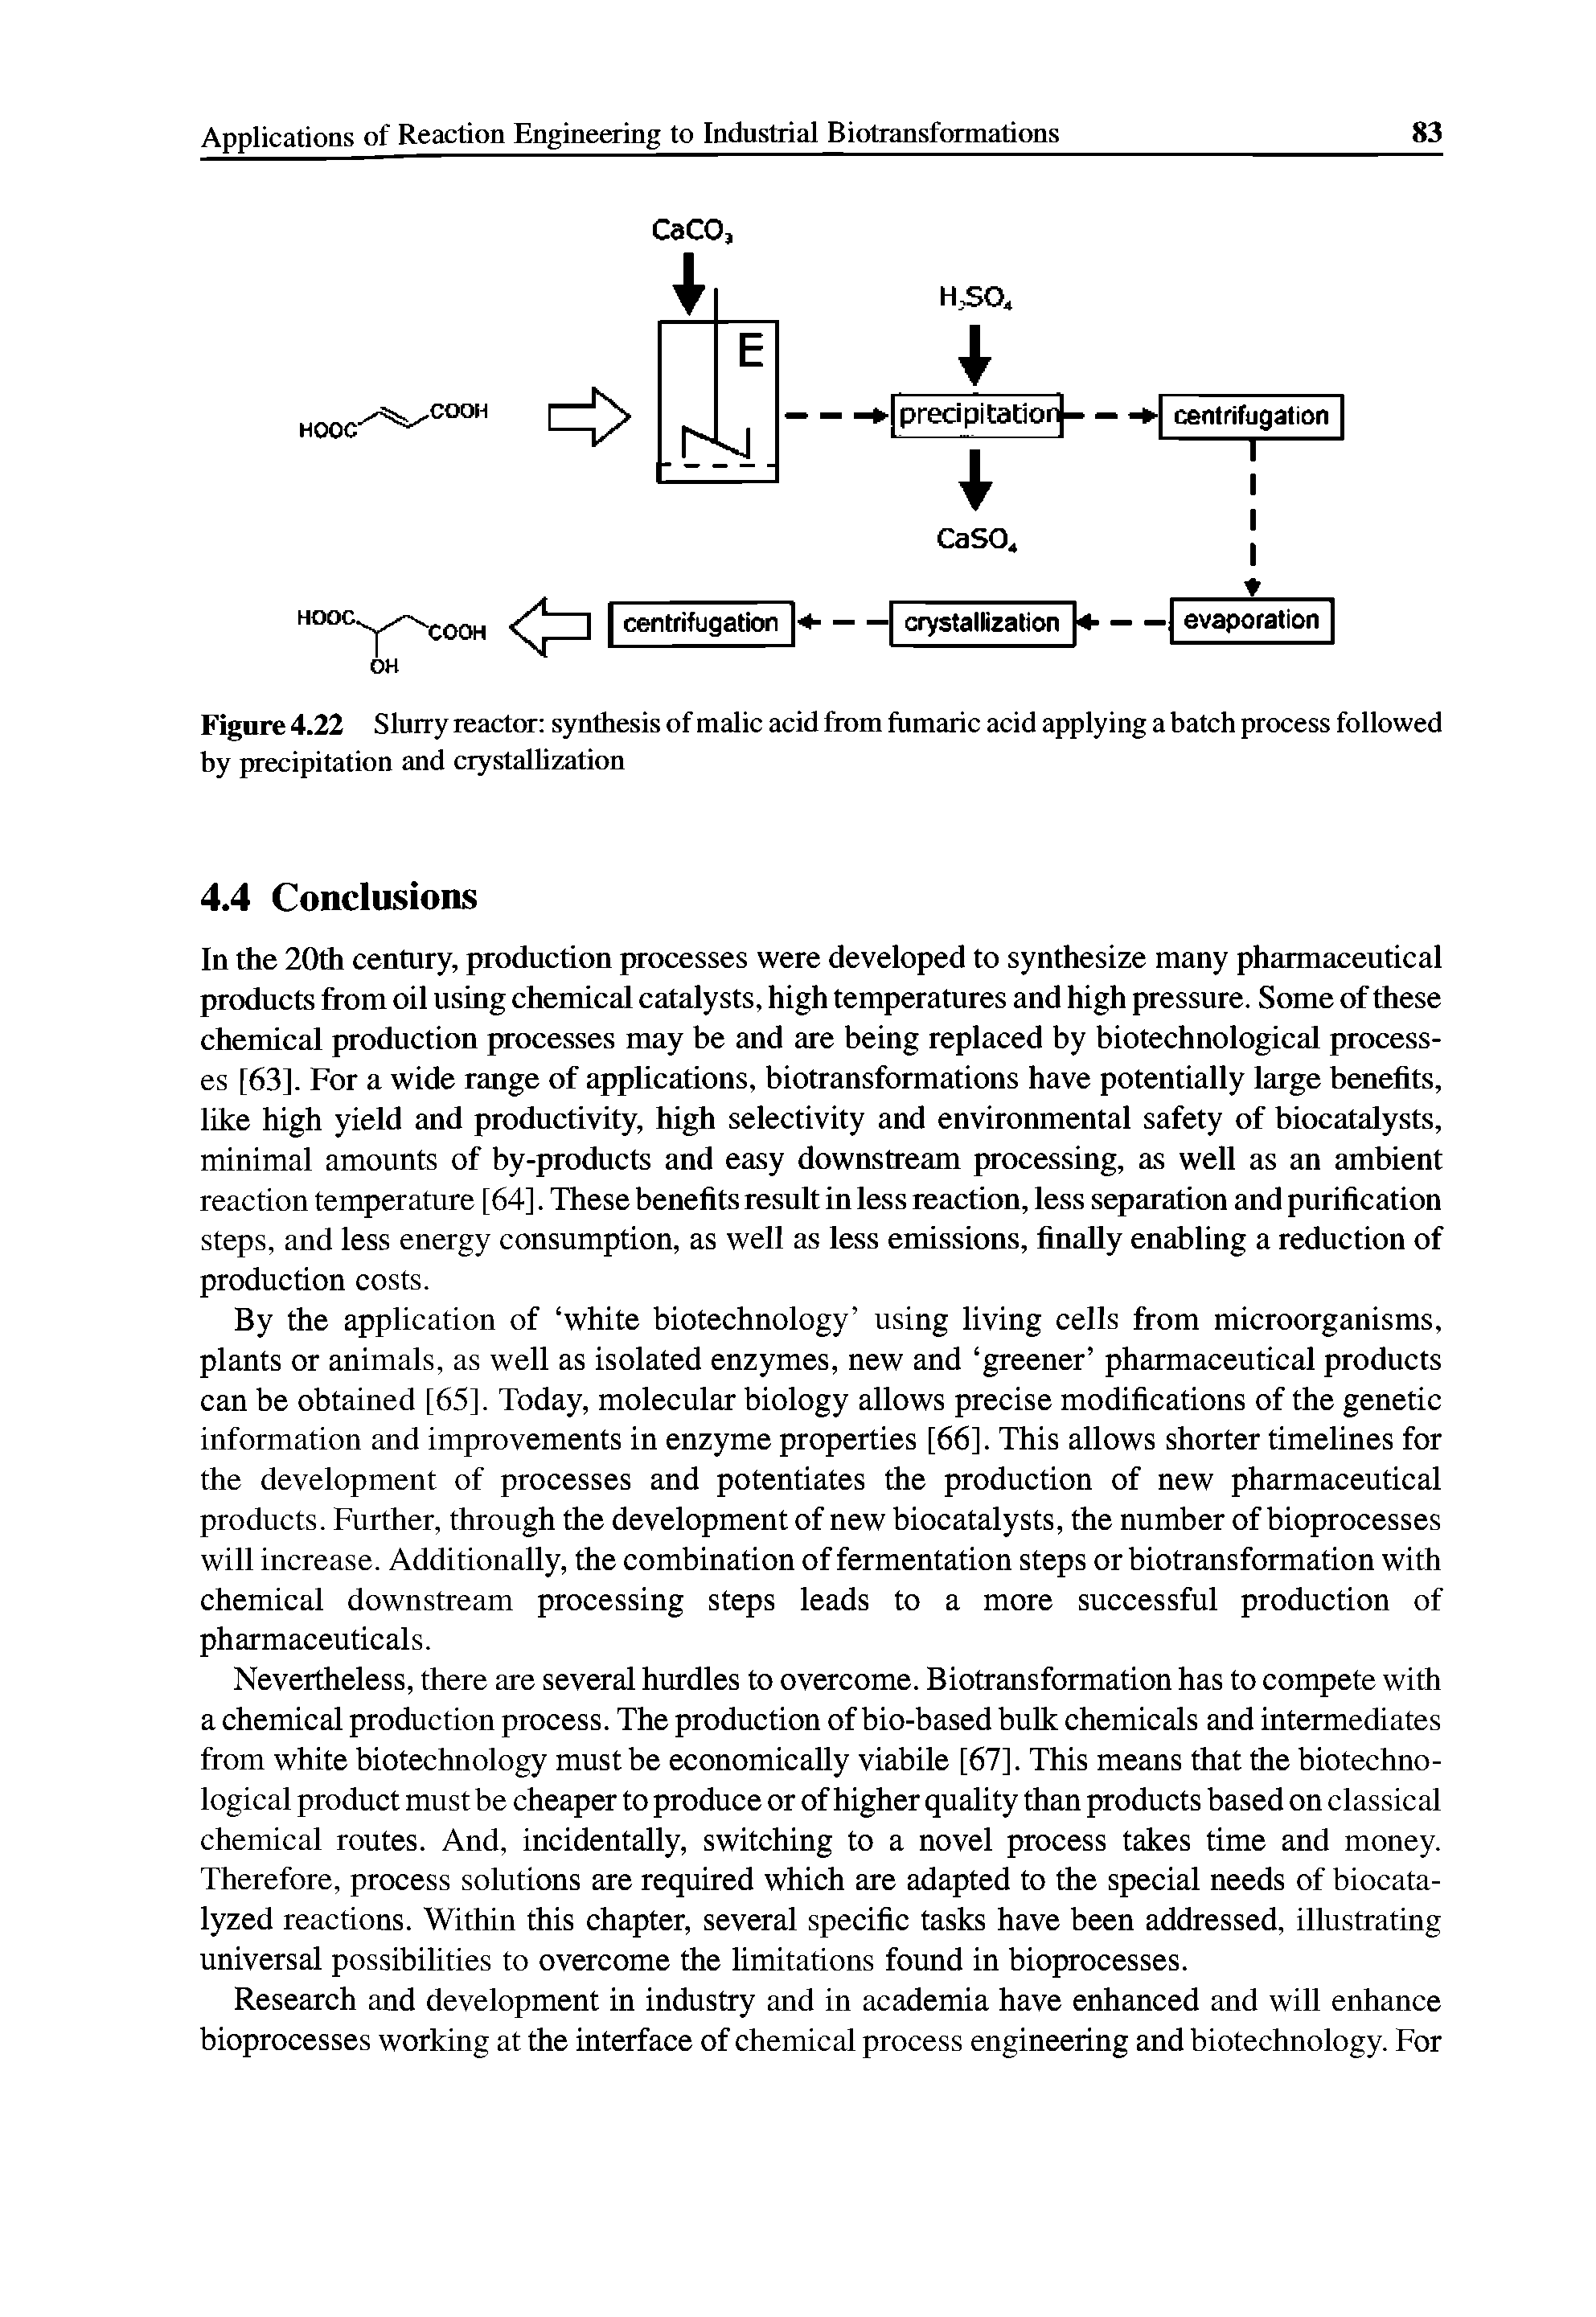 Figure 4.22 Slurry reactor synthesis of malic acid from fumaric acid applying a batch process followed by precipitation and crystallization...